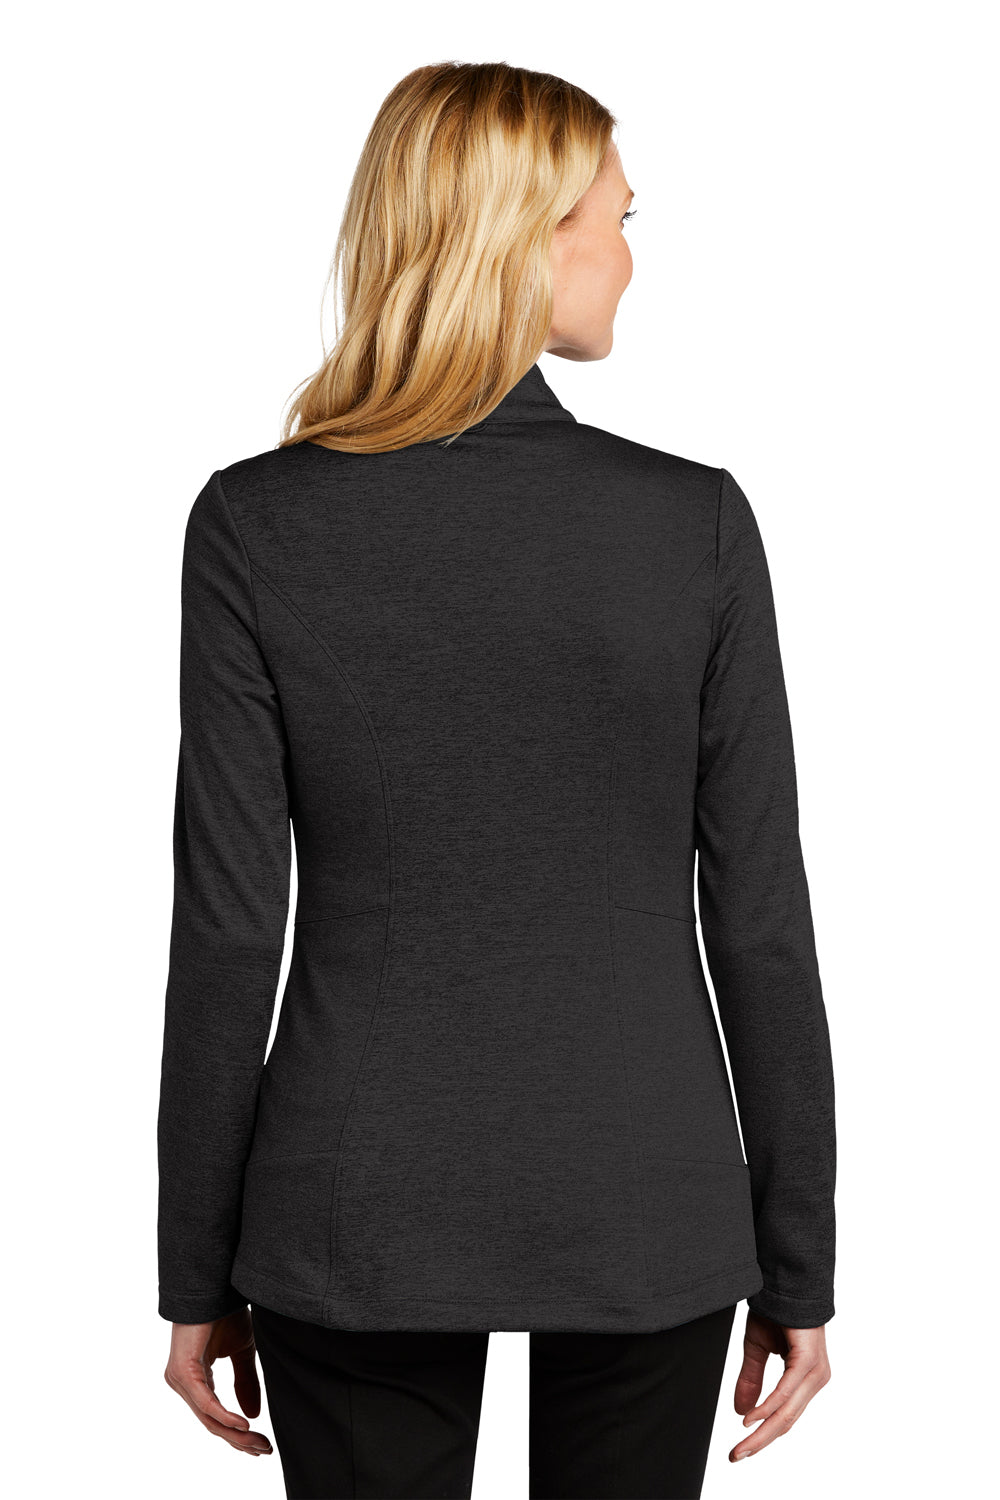 Port Authority Womens Collective Striated Full Zip Fleece Jacket Heather Deep Black Side